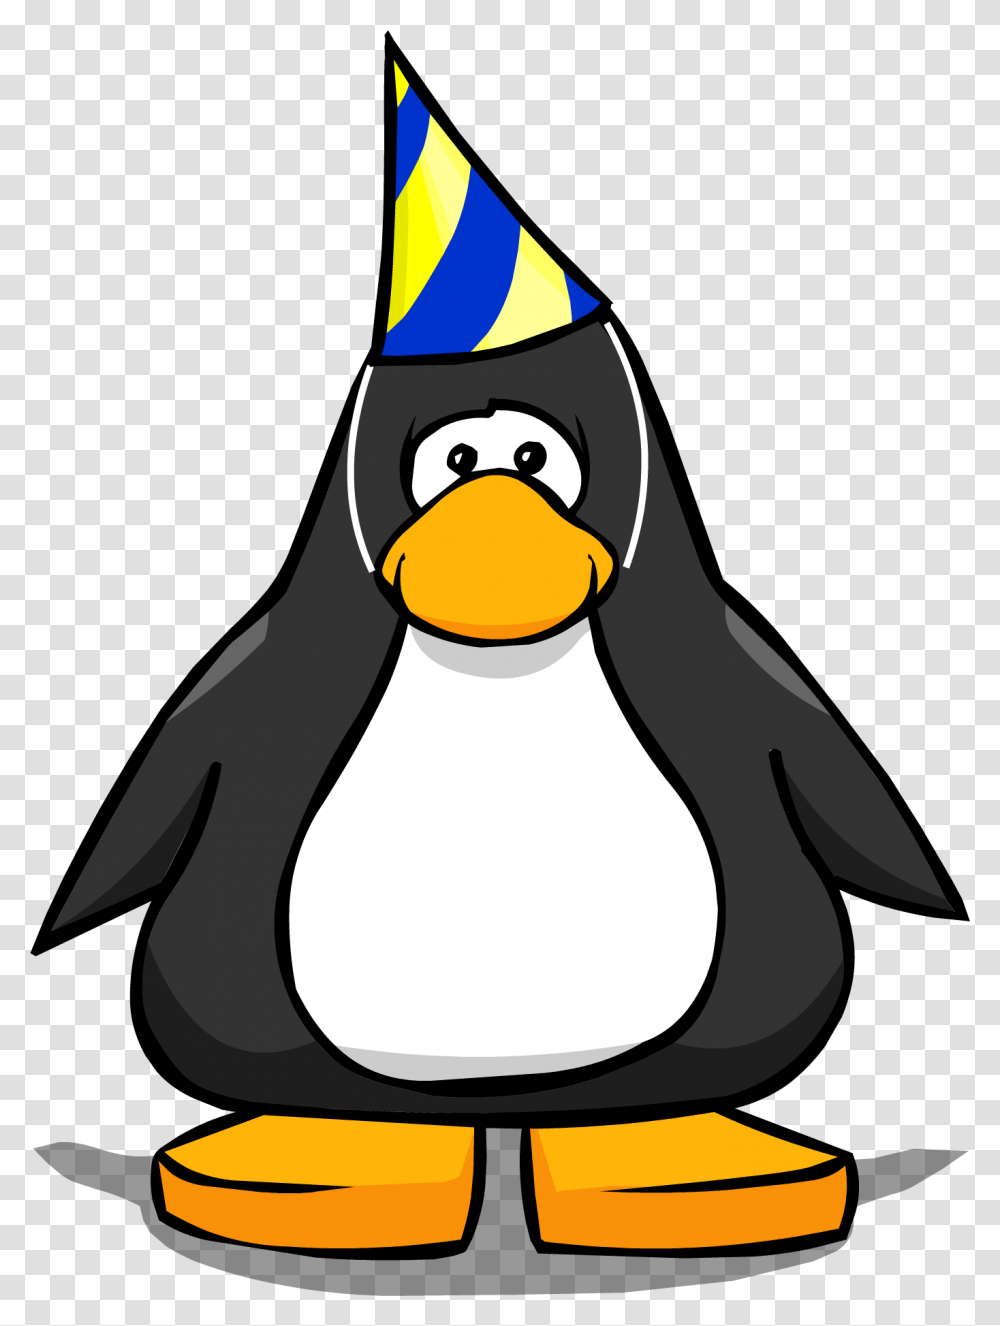 Club Penguin Penguin Club Penguin With Headphones, Apparel, Party Hat, Bird Transparent Png